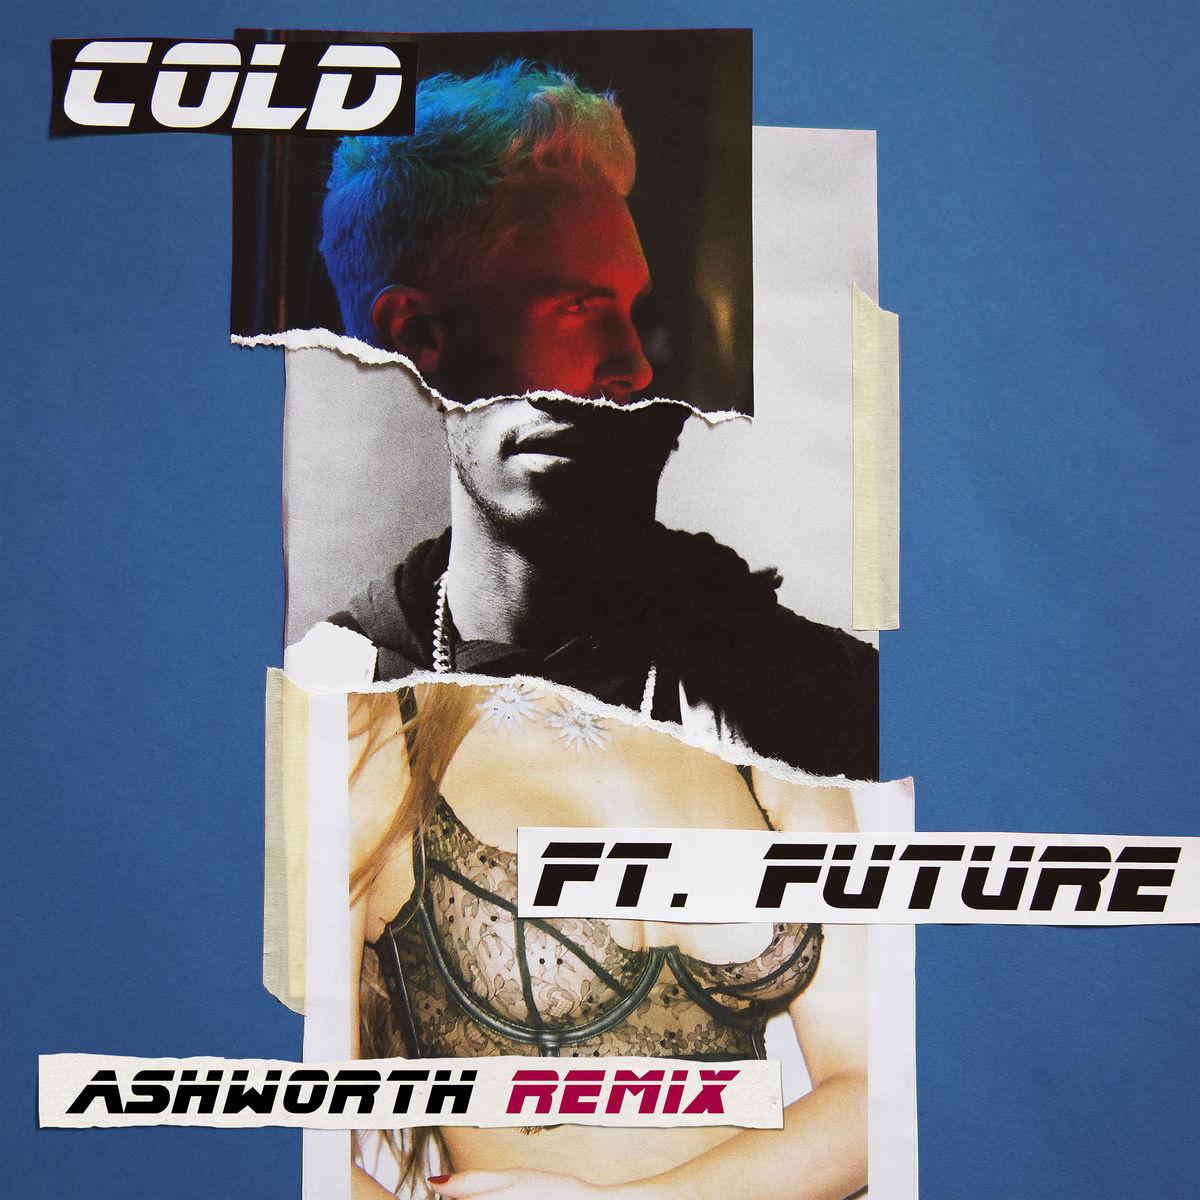 Cold (Ashworth Remix)